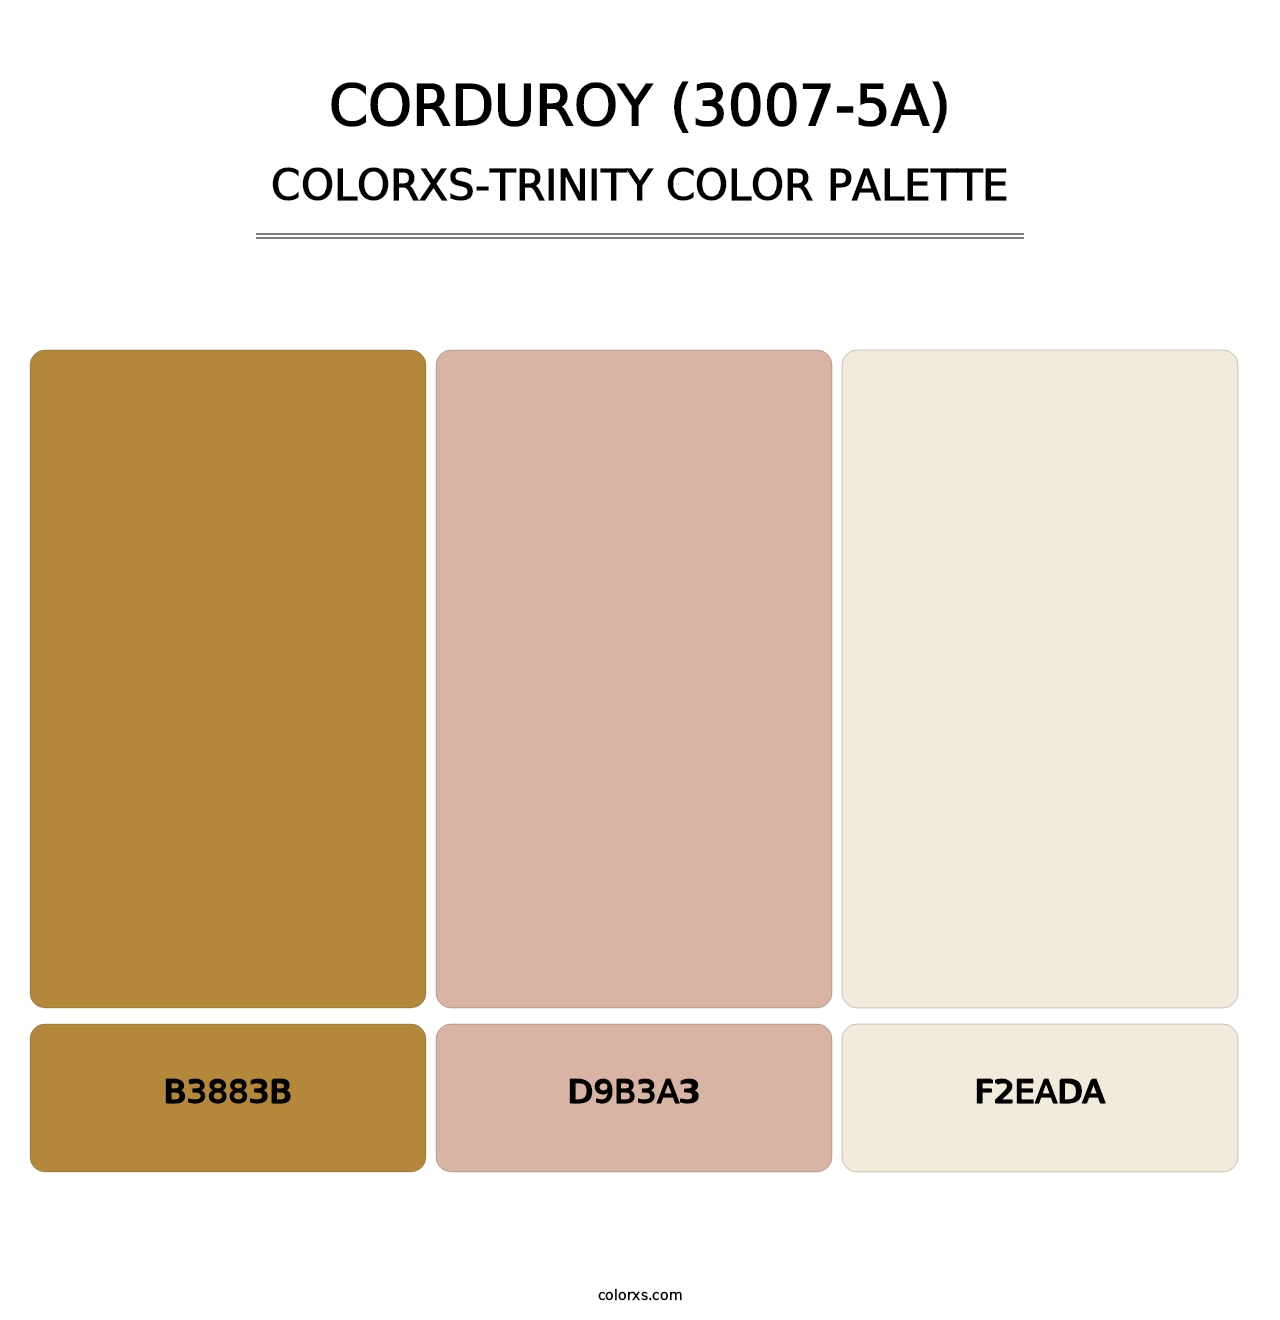 Corduroy (3007-5A) - Colorxs Trinity Palette